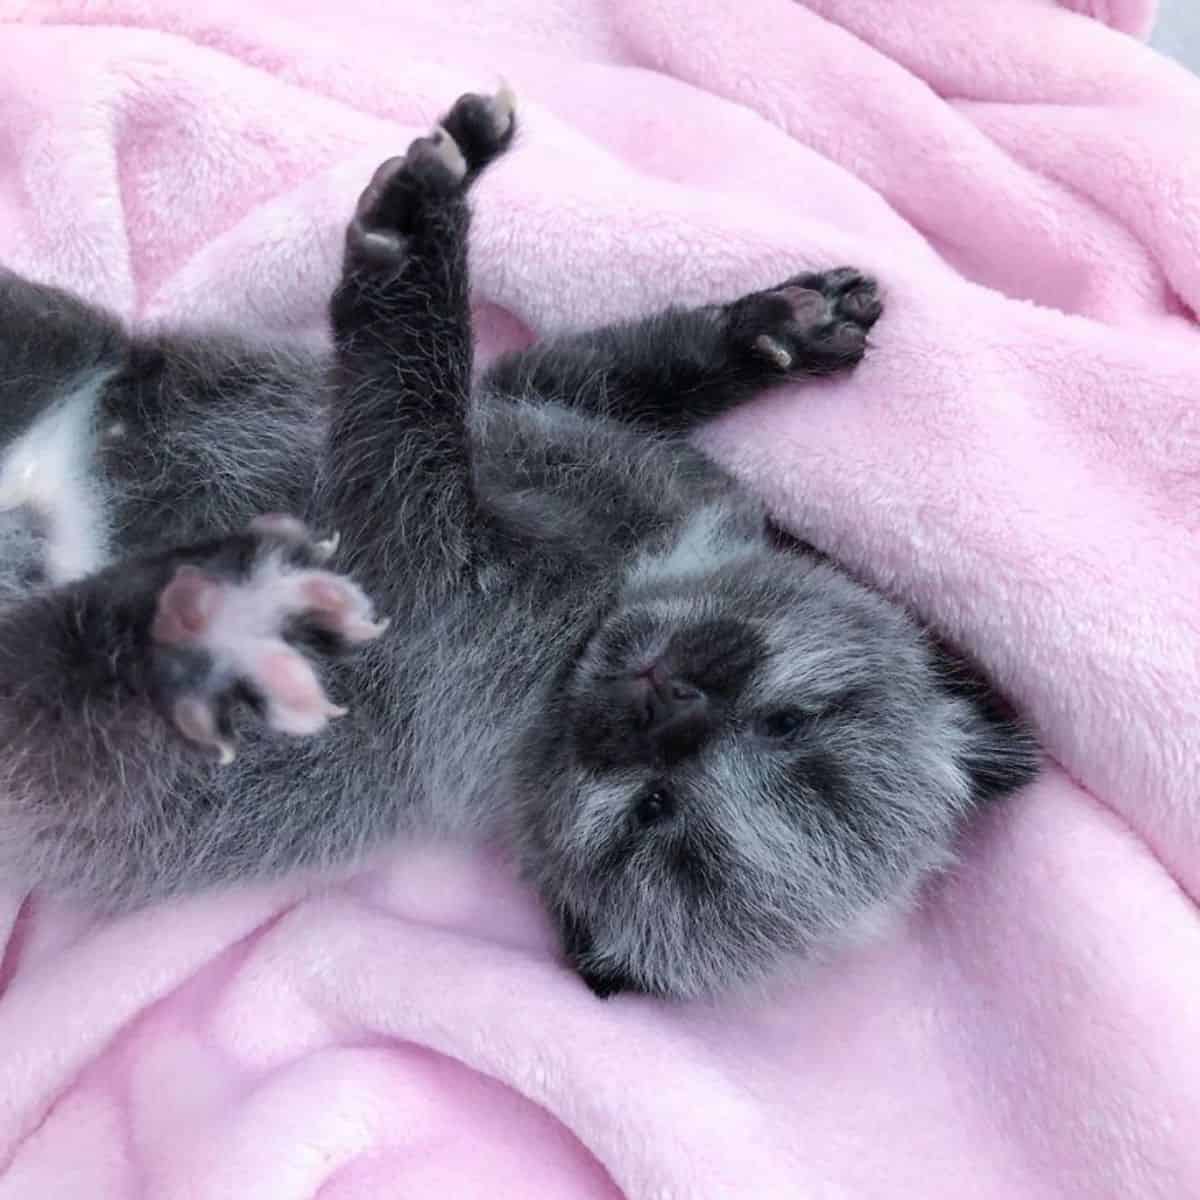 tiny kitten stretching